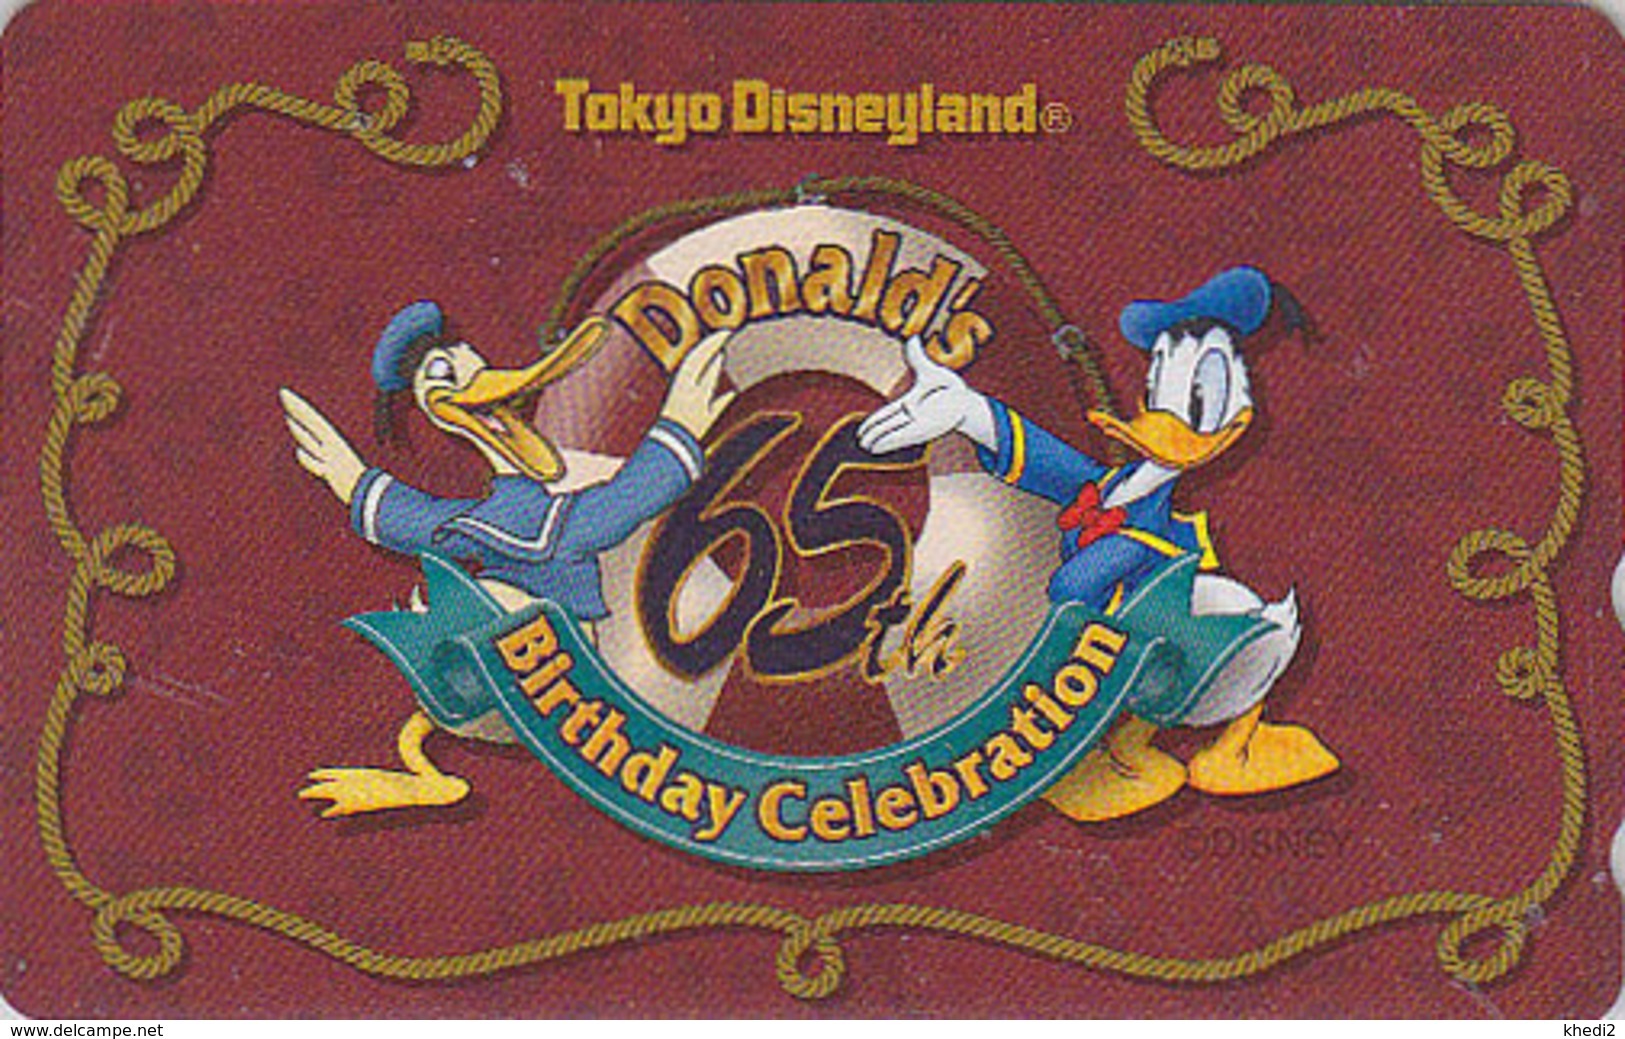 Télécarte NEUVE JAPON / 110-206552 - DISNEY - DISNEYLAND / 65th Birthday DONALD DUCK - JAPAN MINT Phonecard - Disney